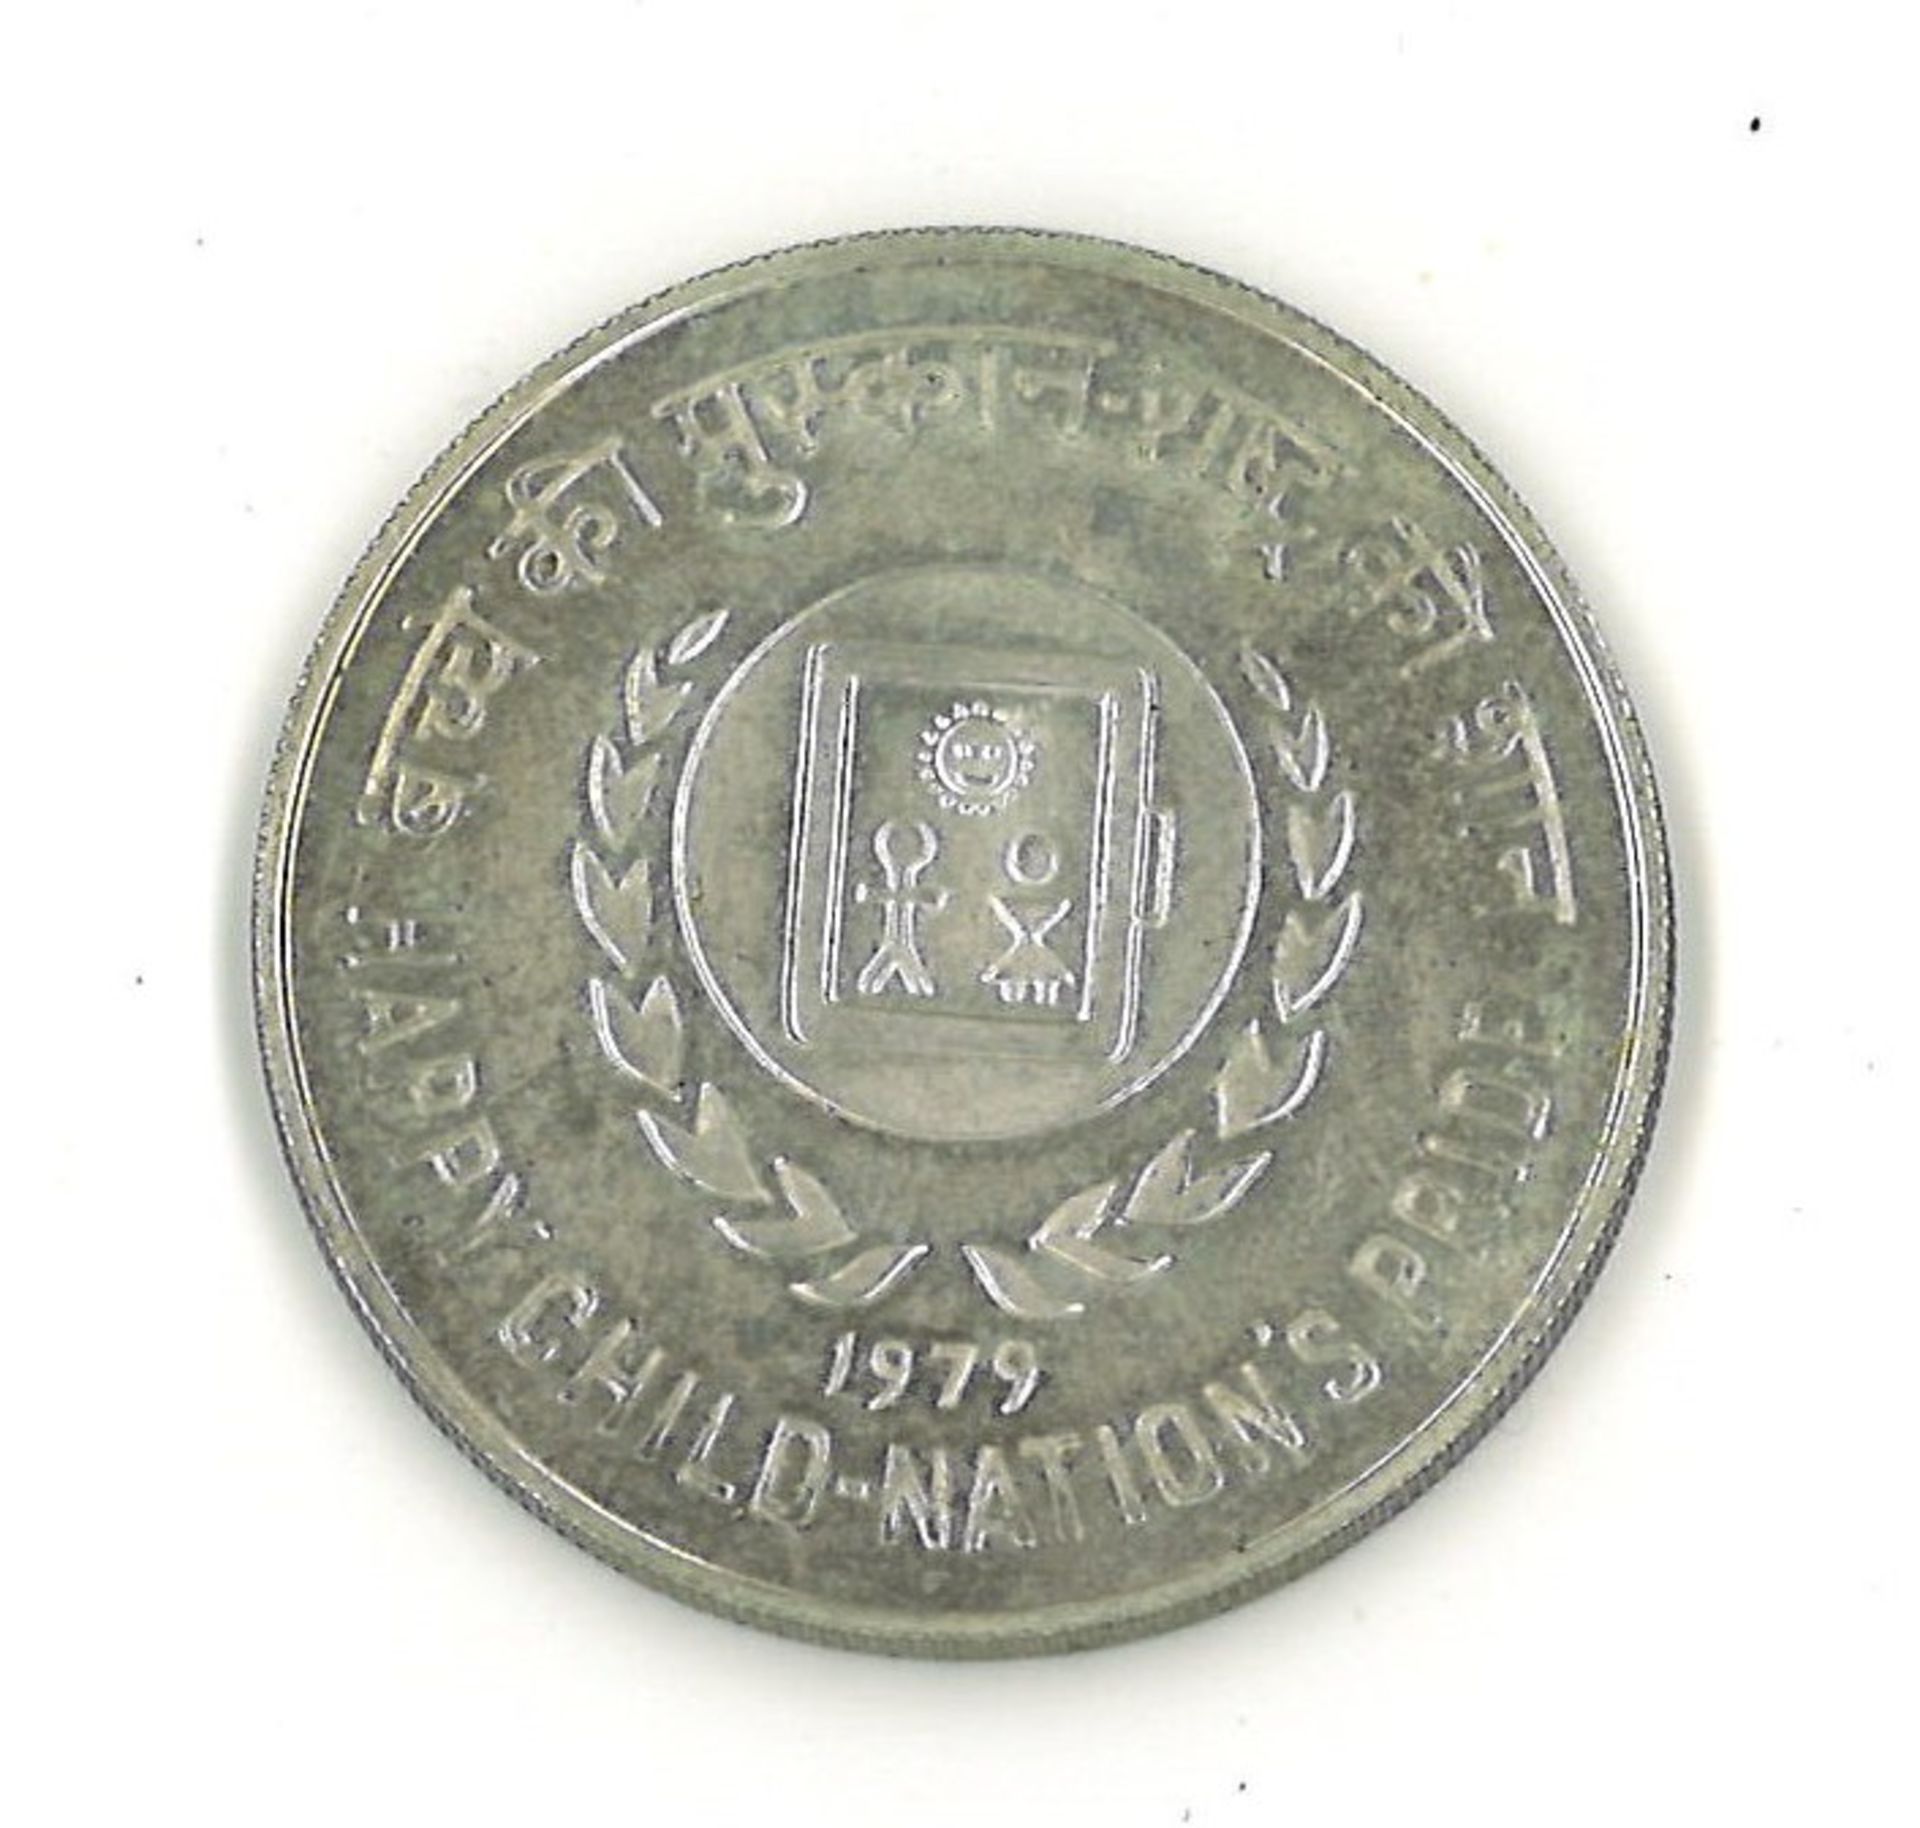 Indien. 50 Rupees Silber 1979